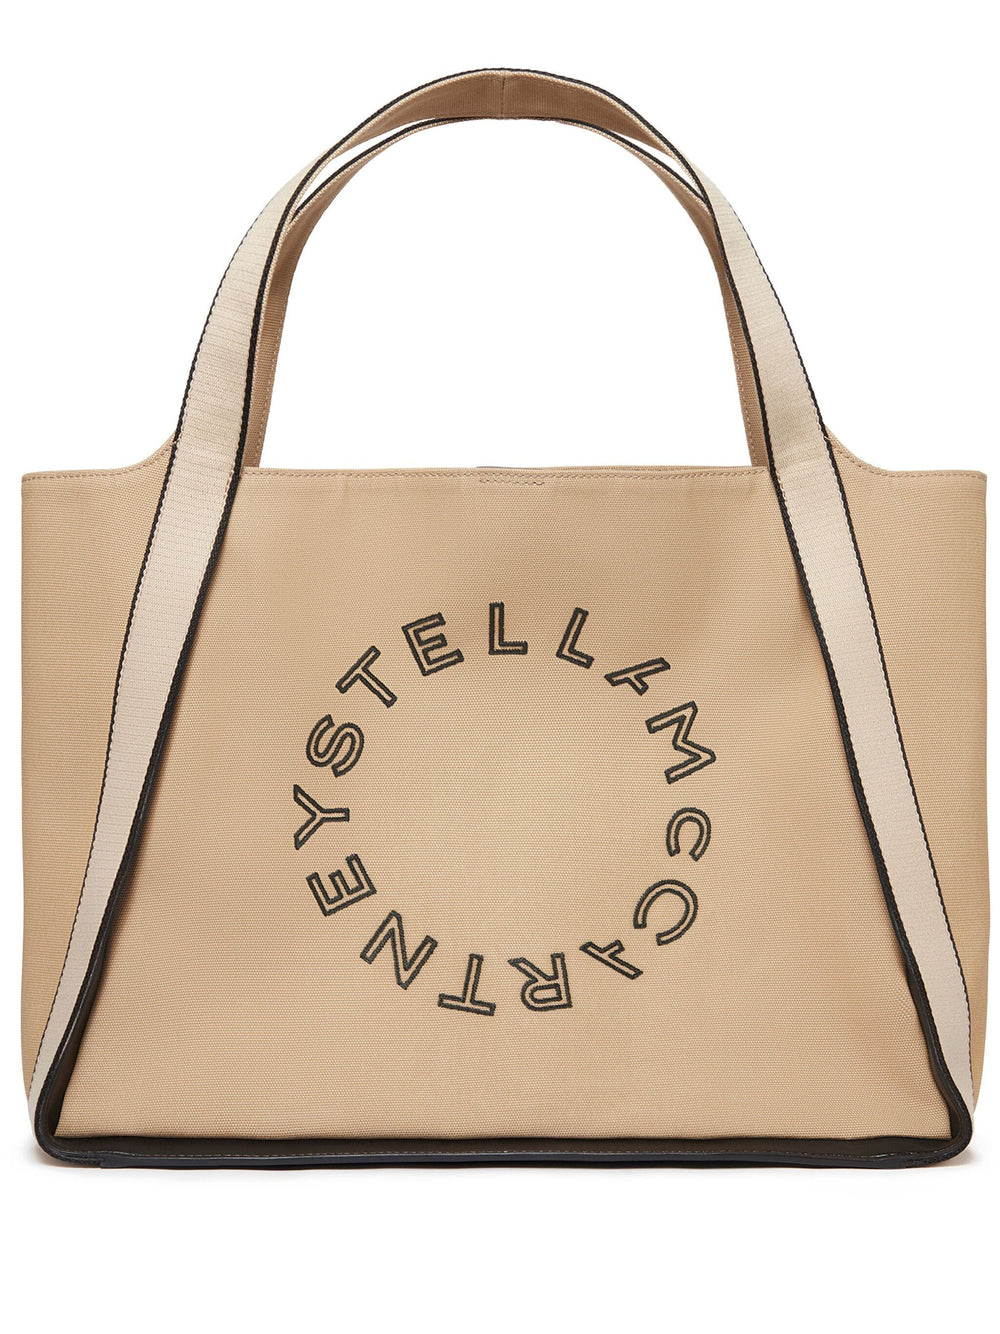 Stella-McCartney-Embroidered-Logo-Tote-Beige-2